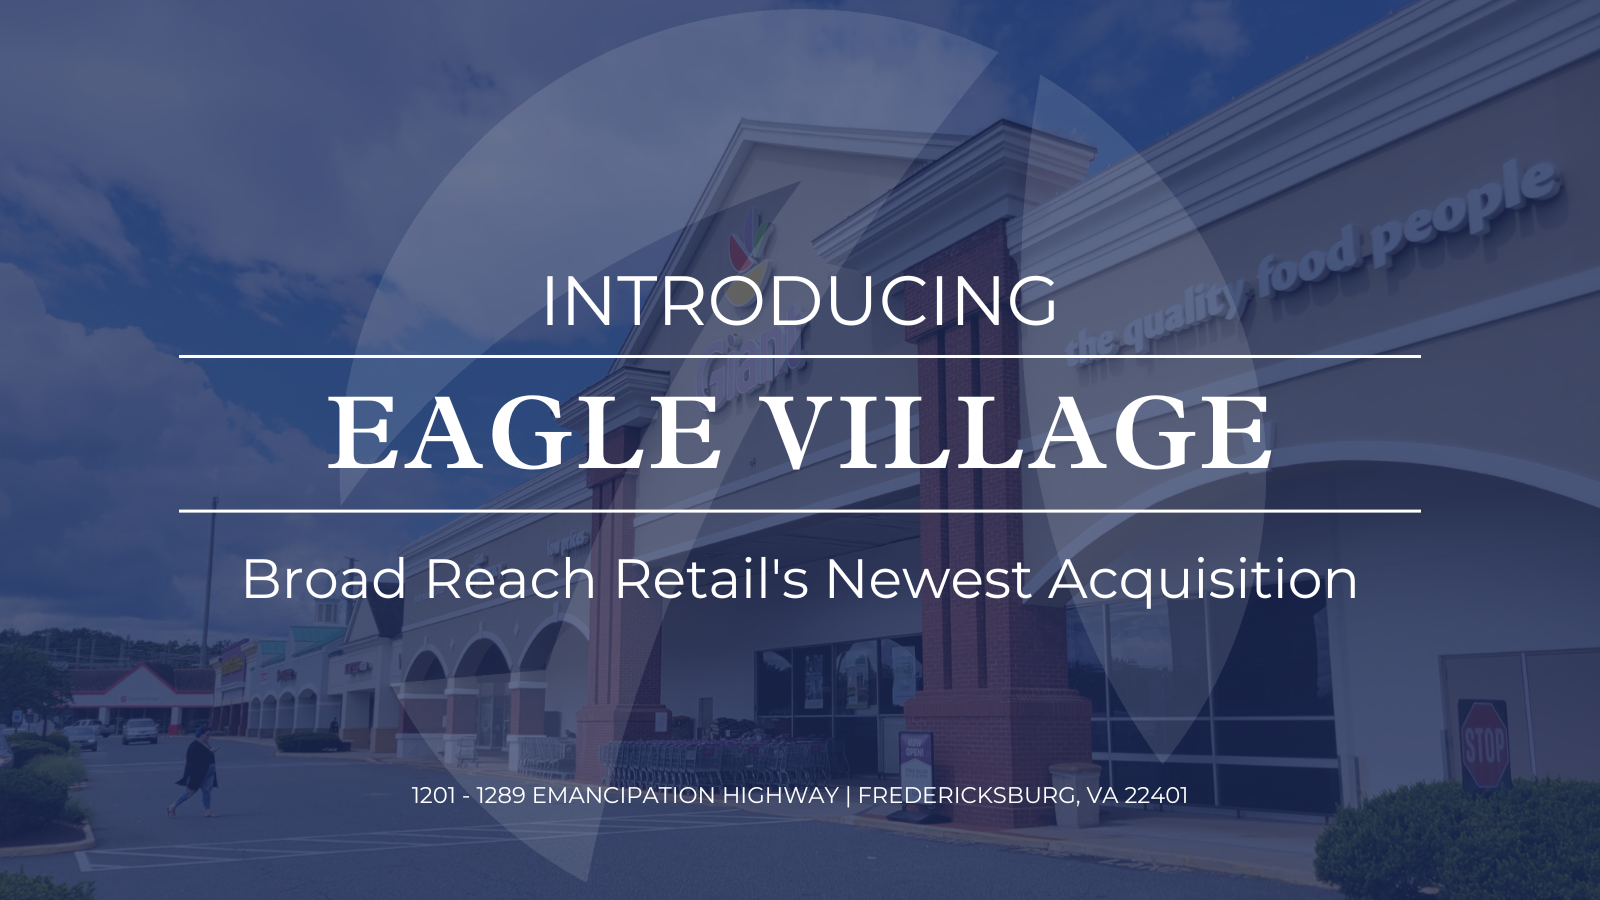 Broad Reach acquired Eagle Village.